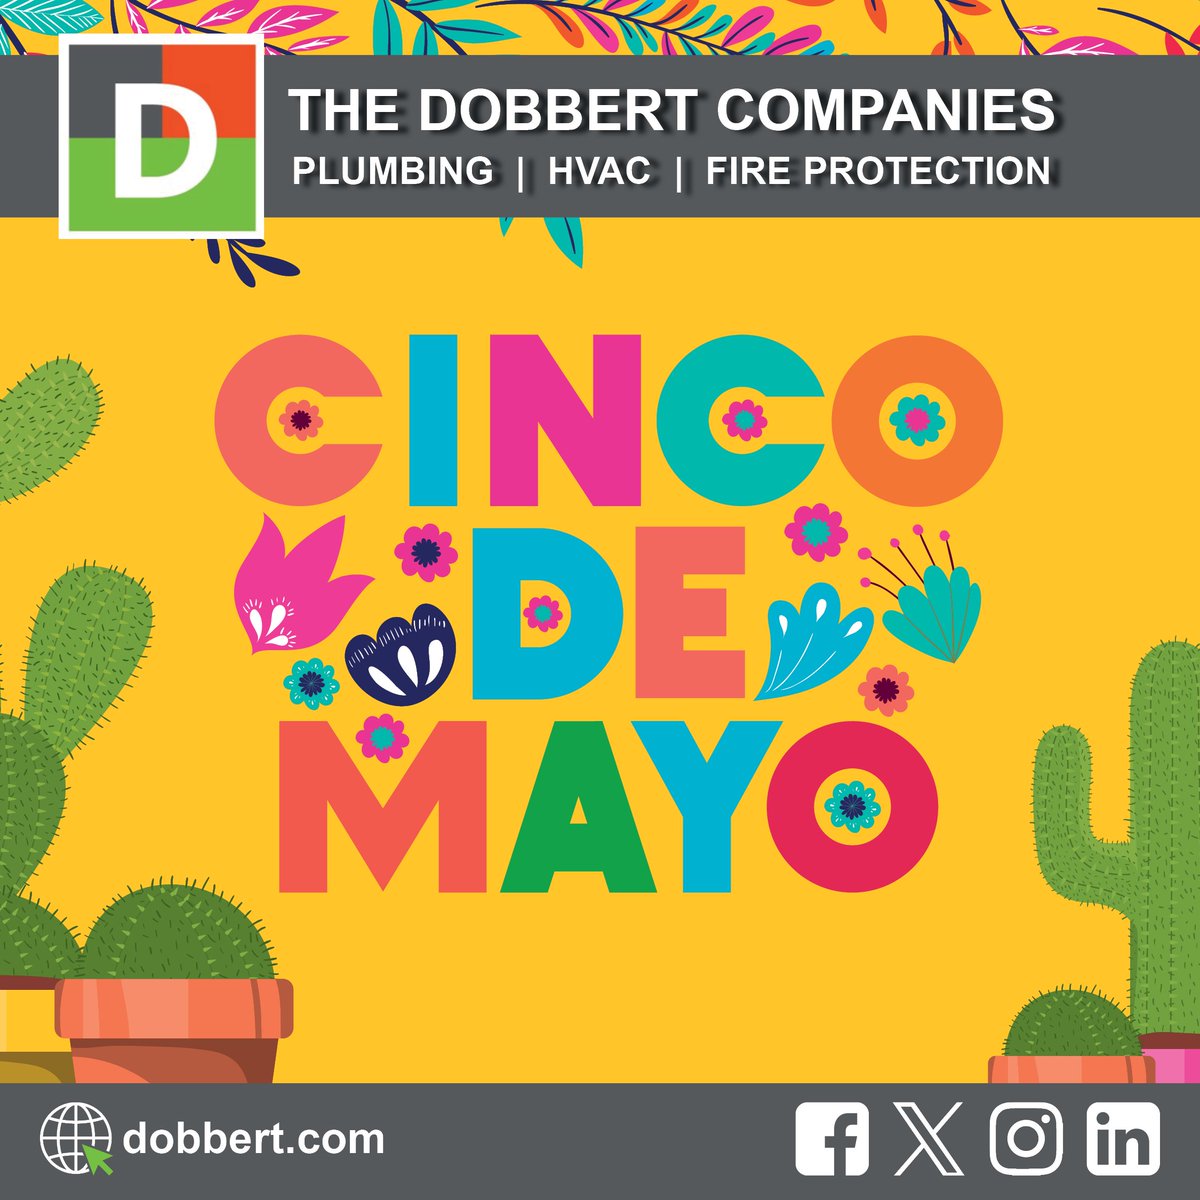 Feliz Cinco de Mayo! Fiesta until you siesta! 🎉🎉

#dobbert #dobbertcos #HVAC #plumbing #fireprotection #CincoDeMayo #FiestaTime